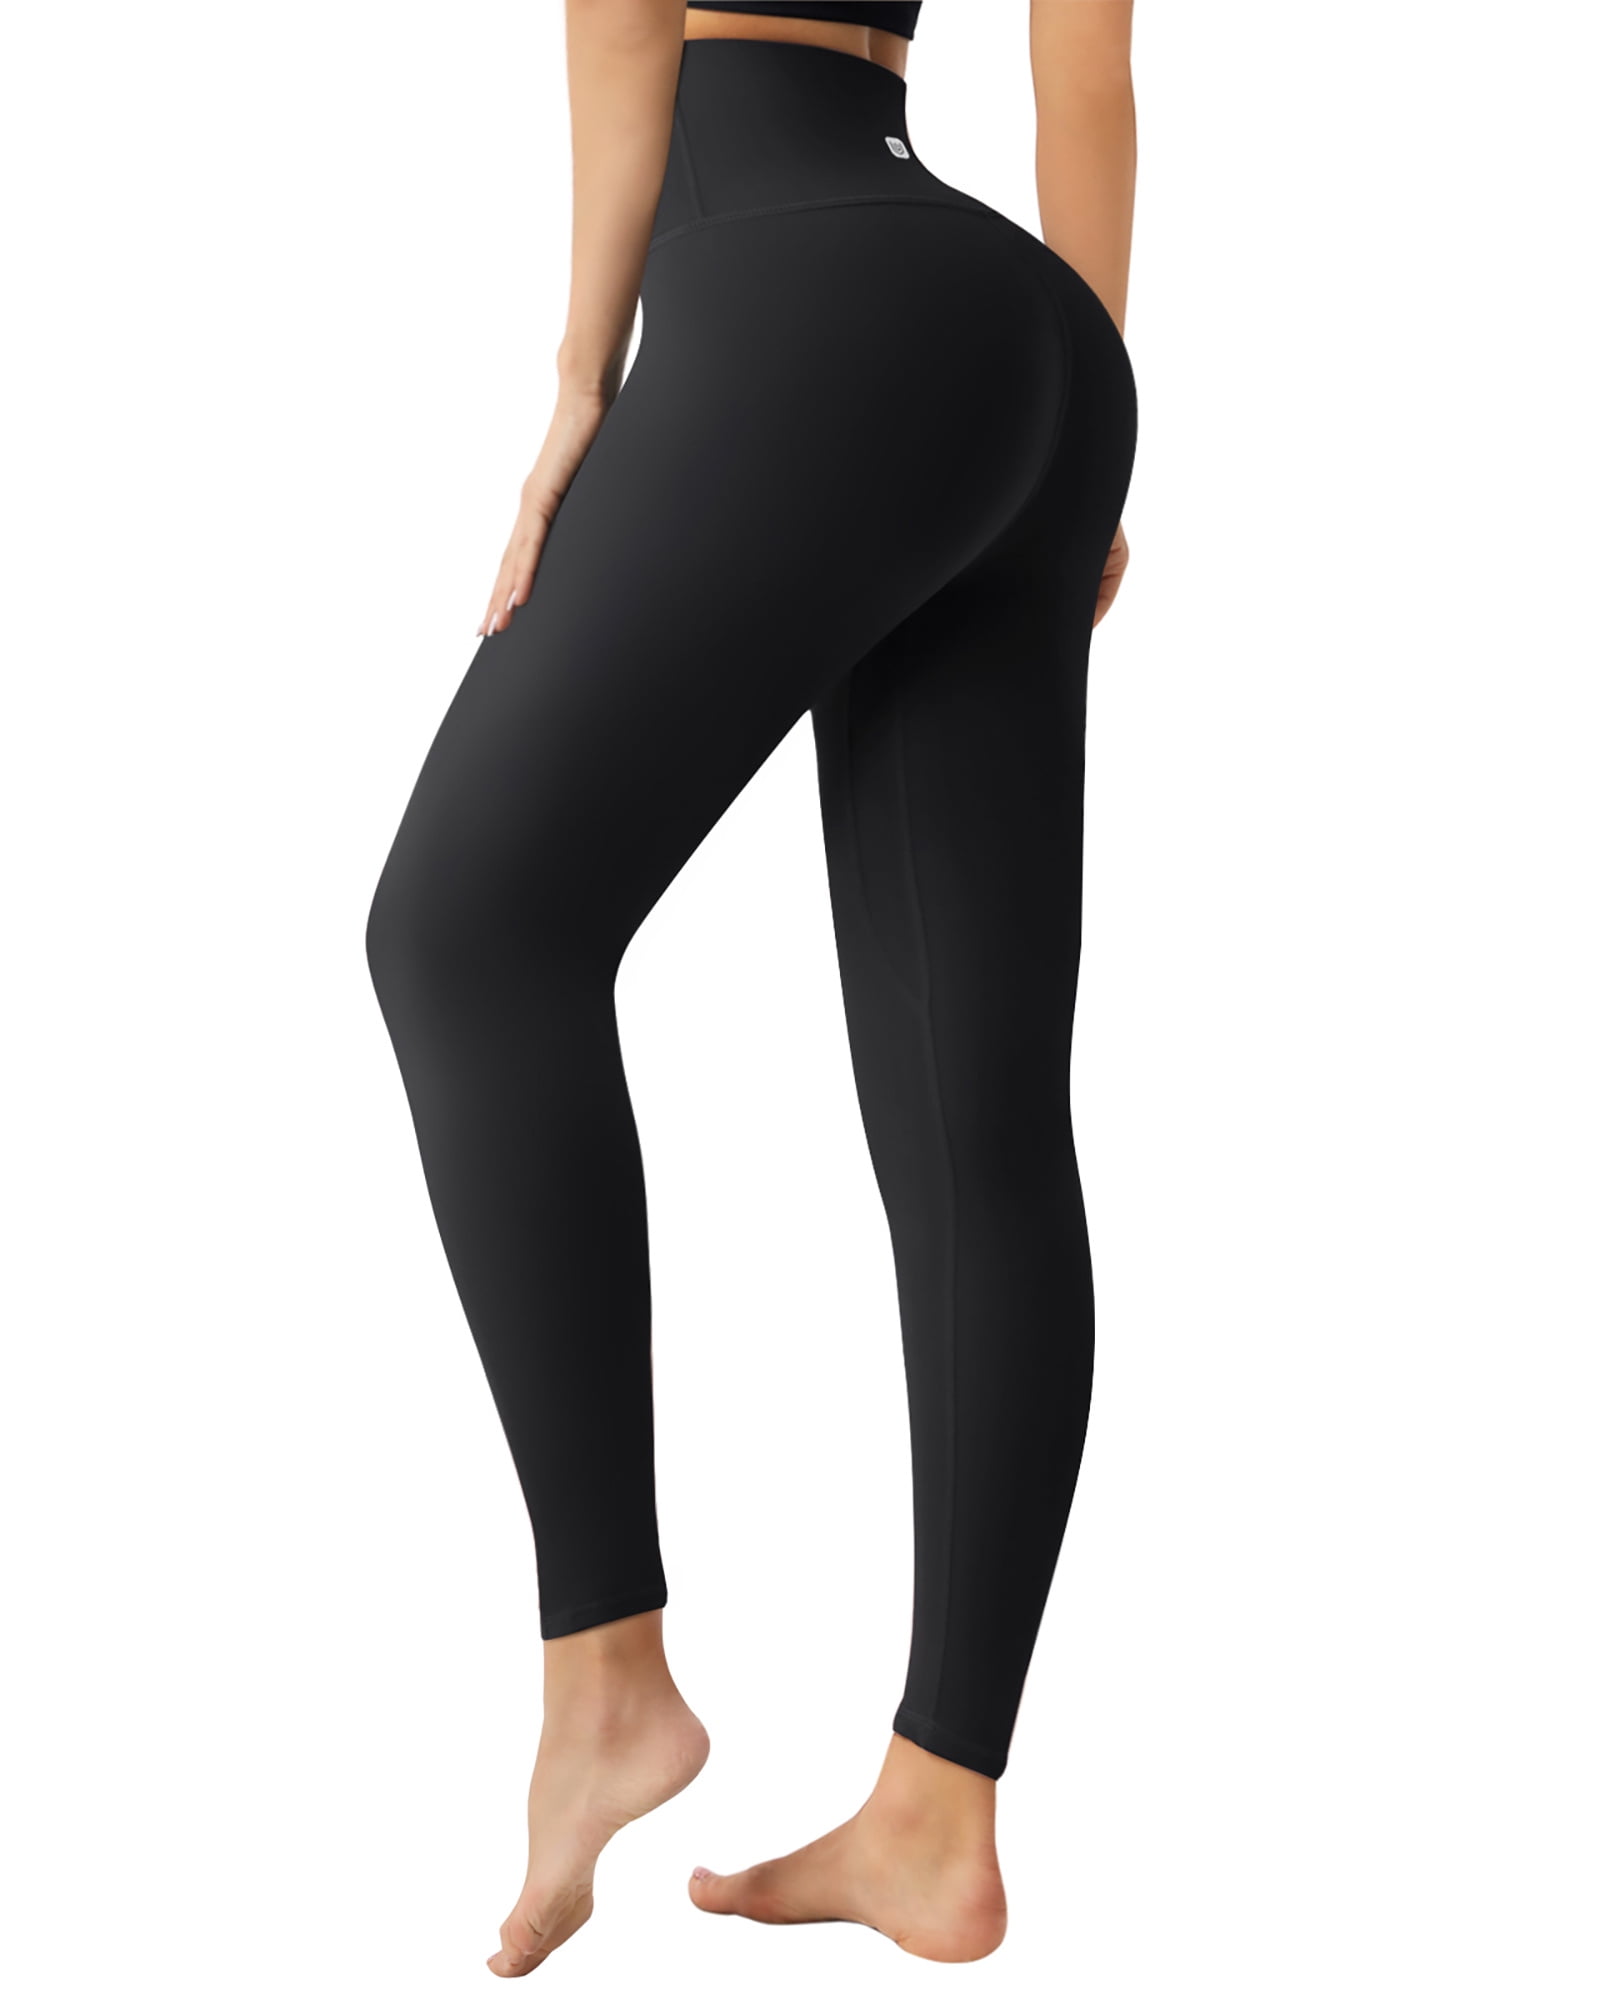 Comprar BUBBLELIME 25/26/27/28 Inseam Women's Out Pockets High Waist Yoga  Pants Stretchy Workout Pants en USA desde República Dominicana